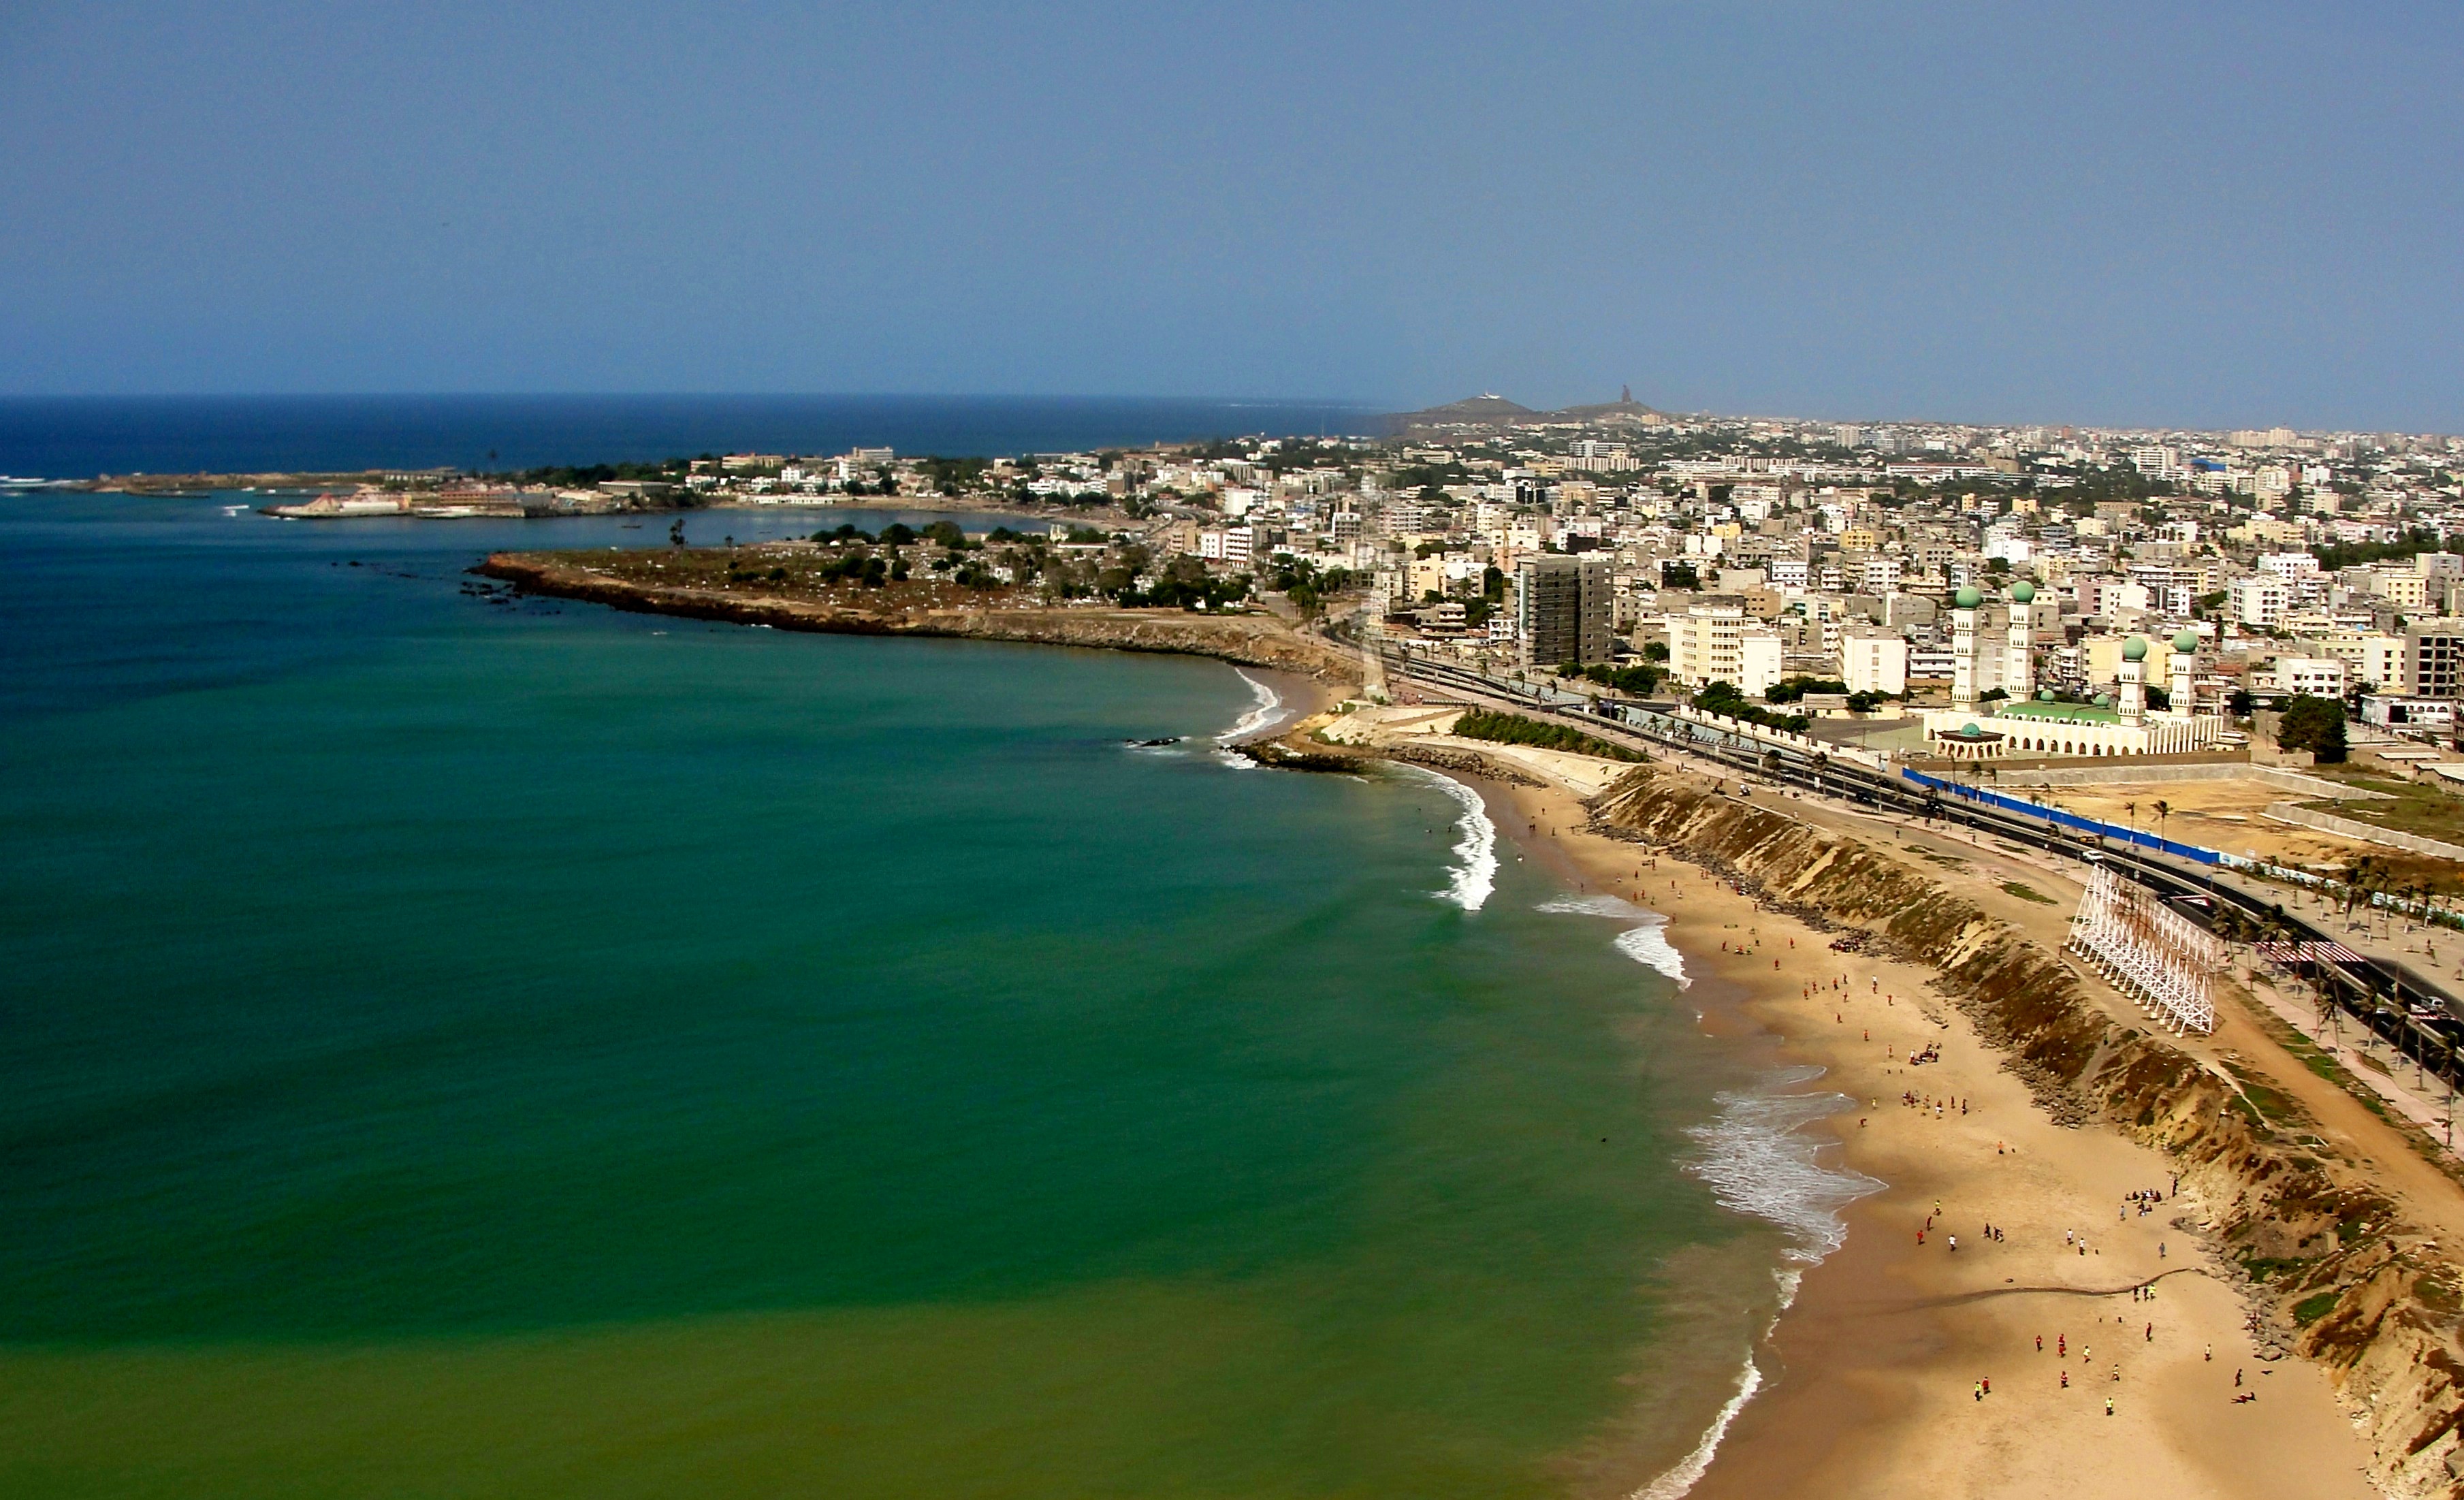 File:Dakar Senegal - Looking North (5274051599).jpg - Wikimedia Commons